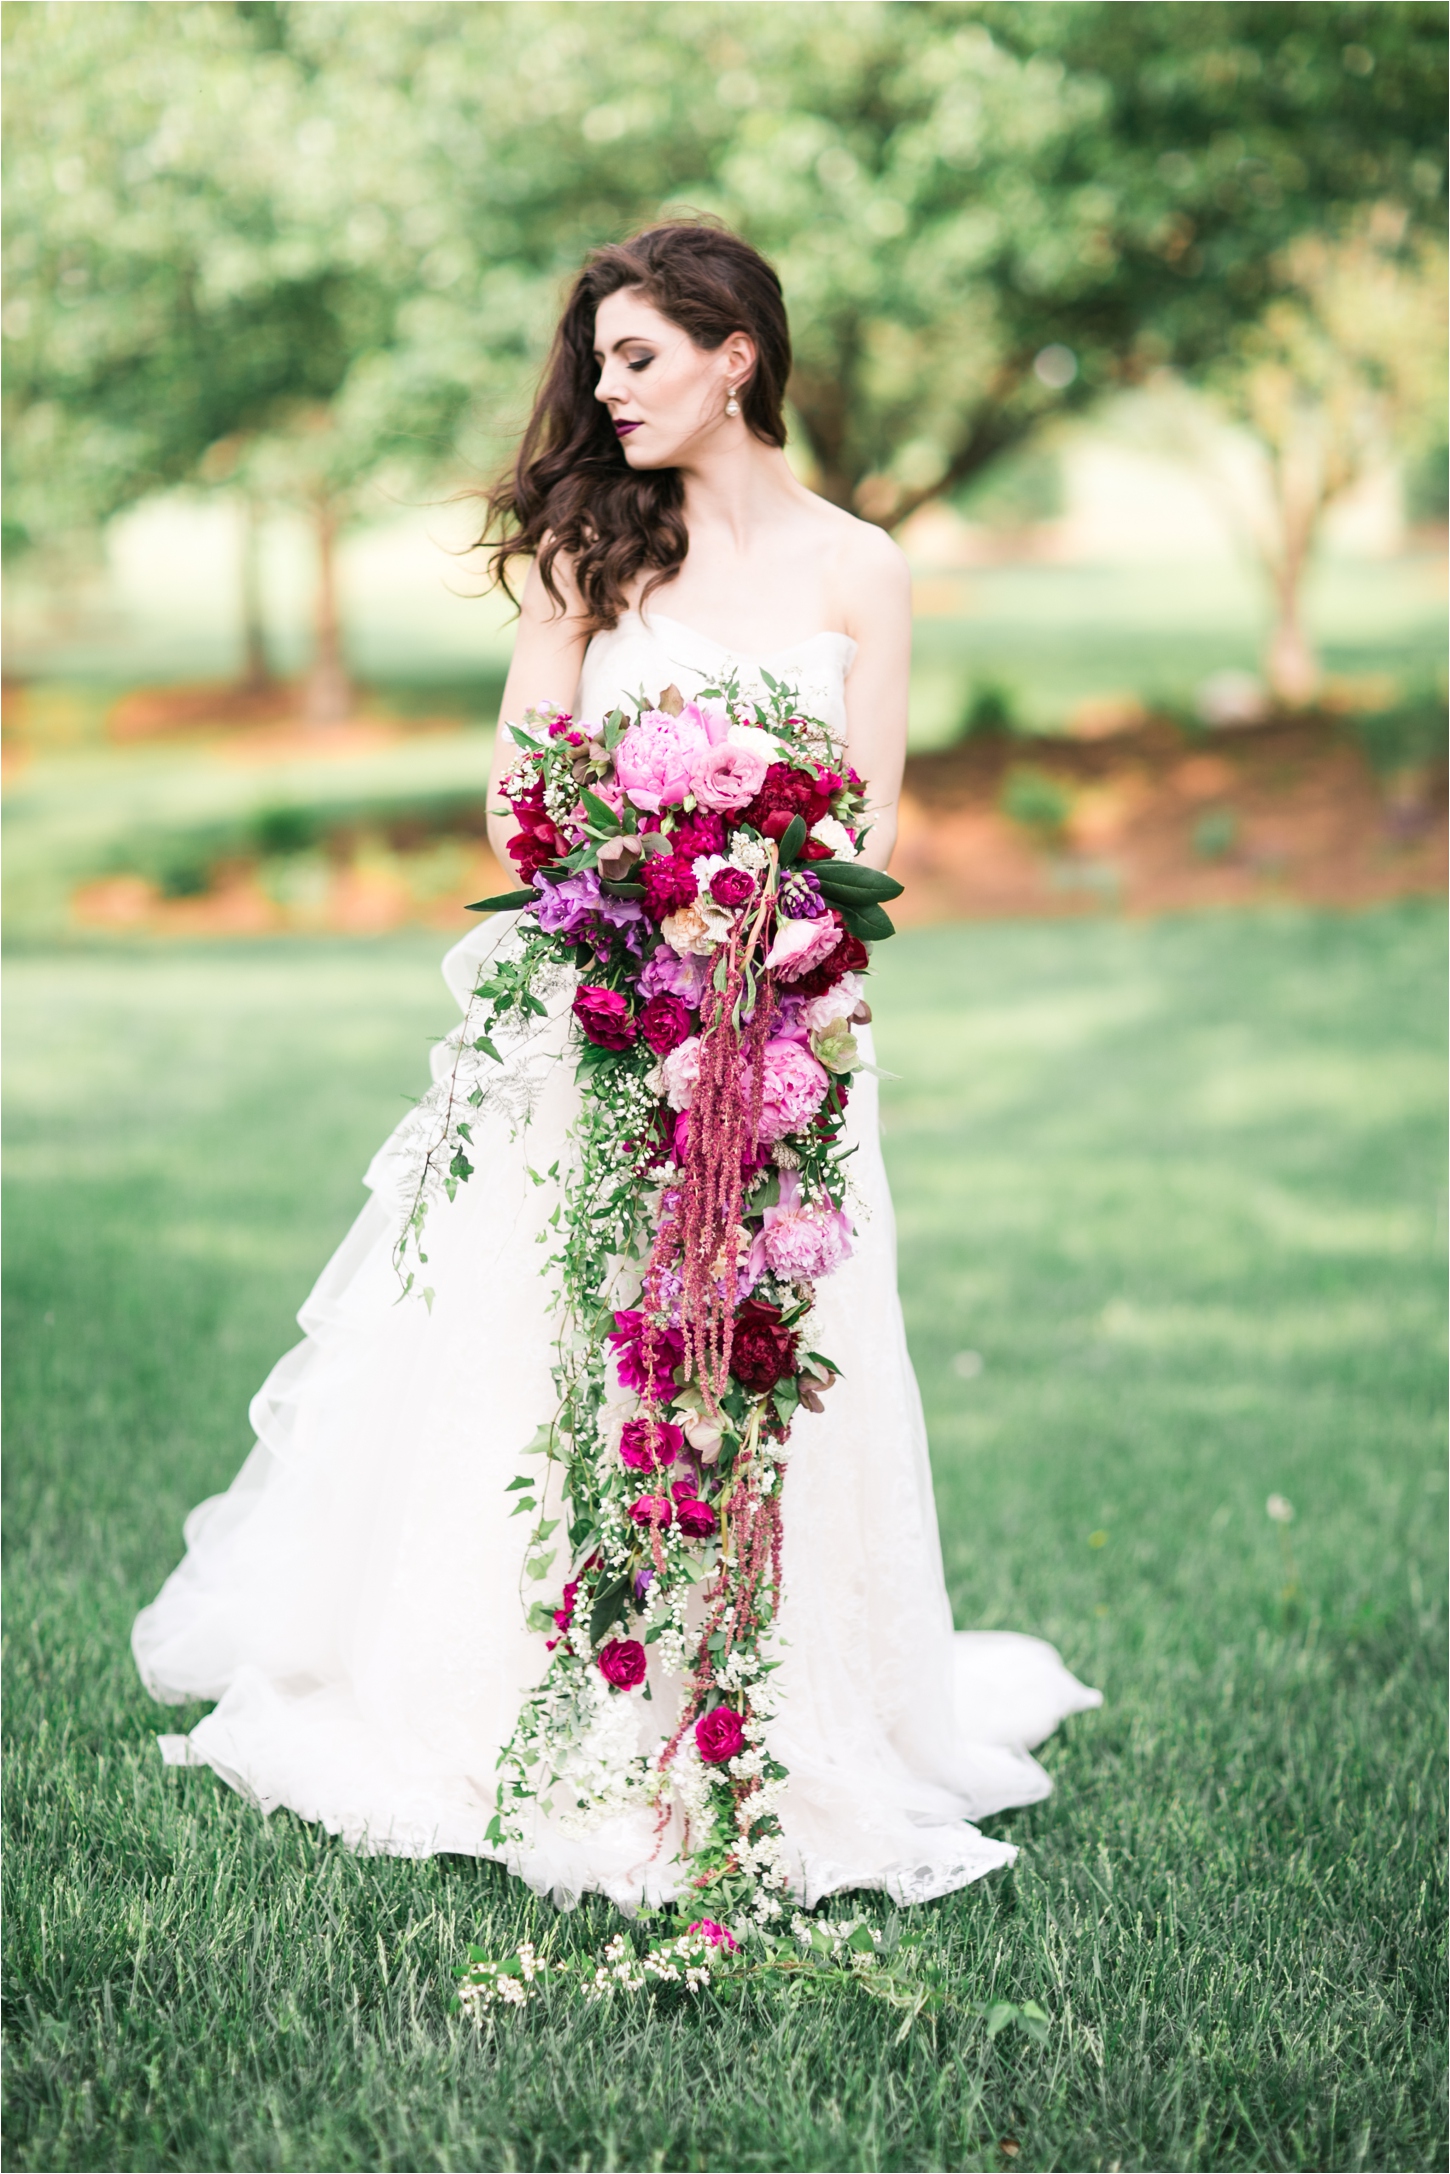 Berry Bridal Inspiration - Trailing bouquet inspiration 